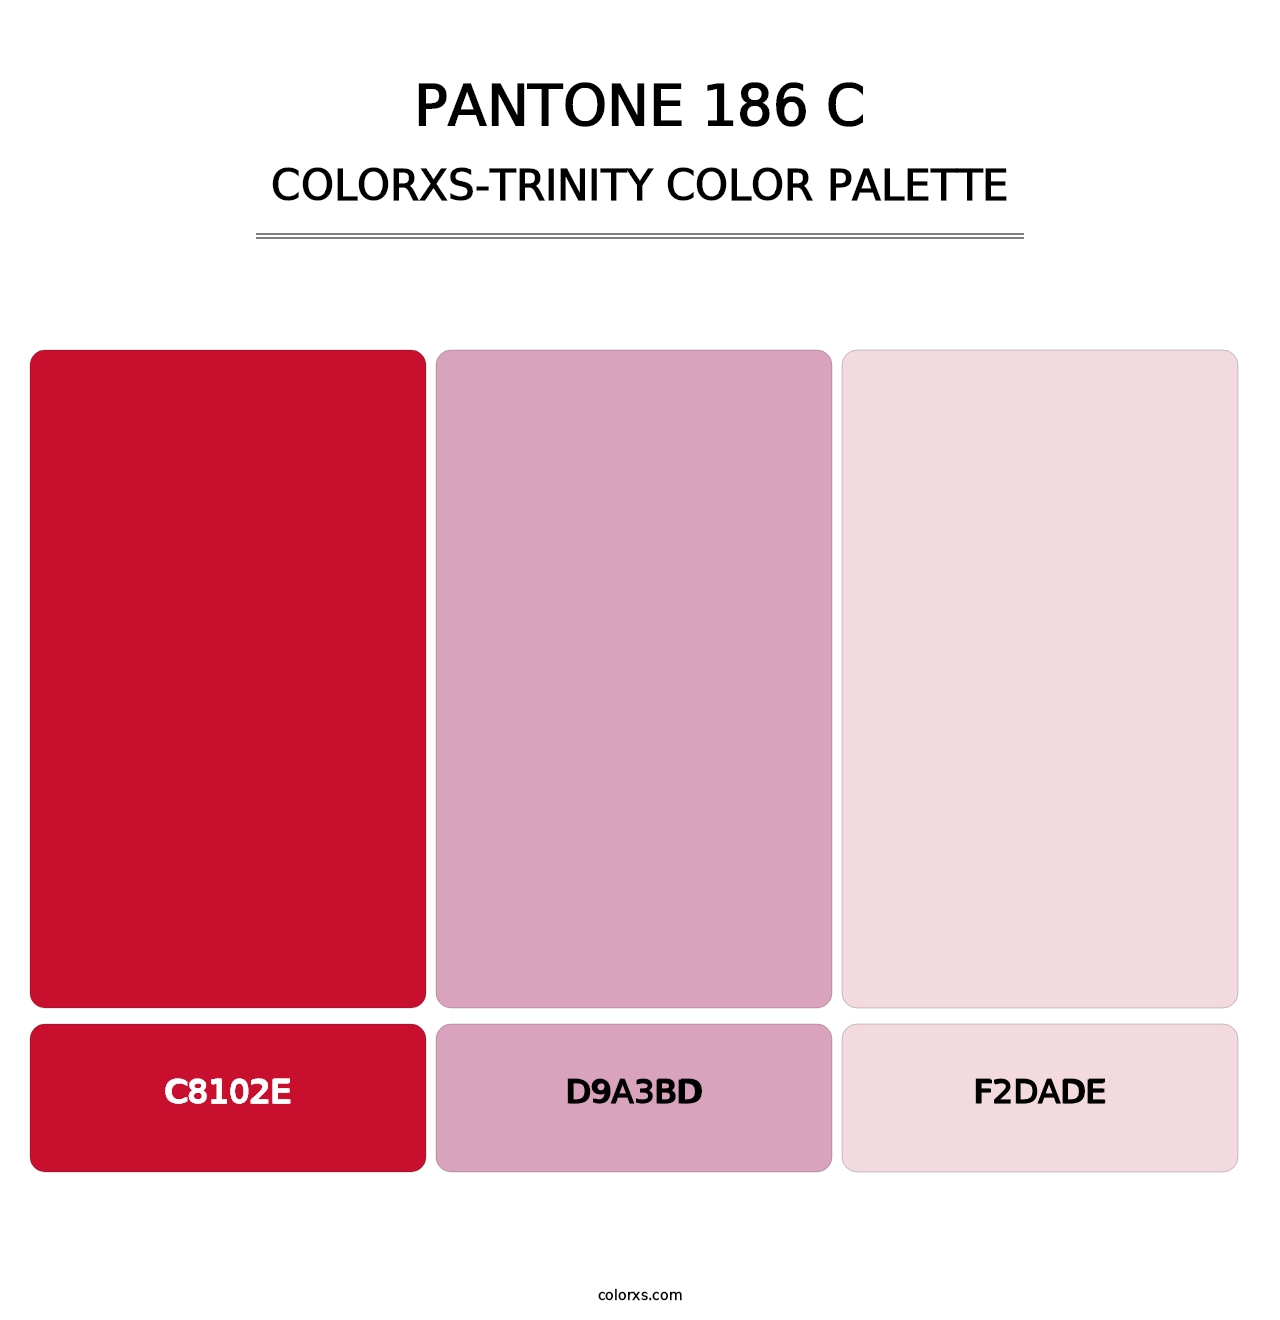 PANTONE 186 C - Colorxs Trinity Palette